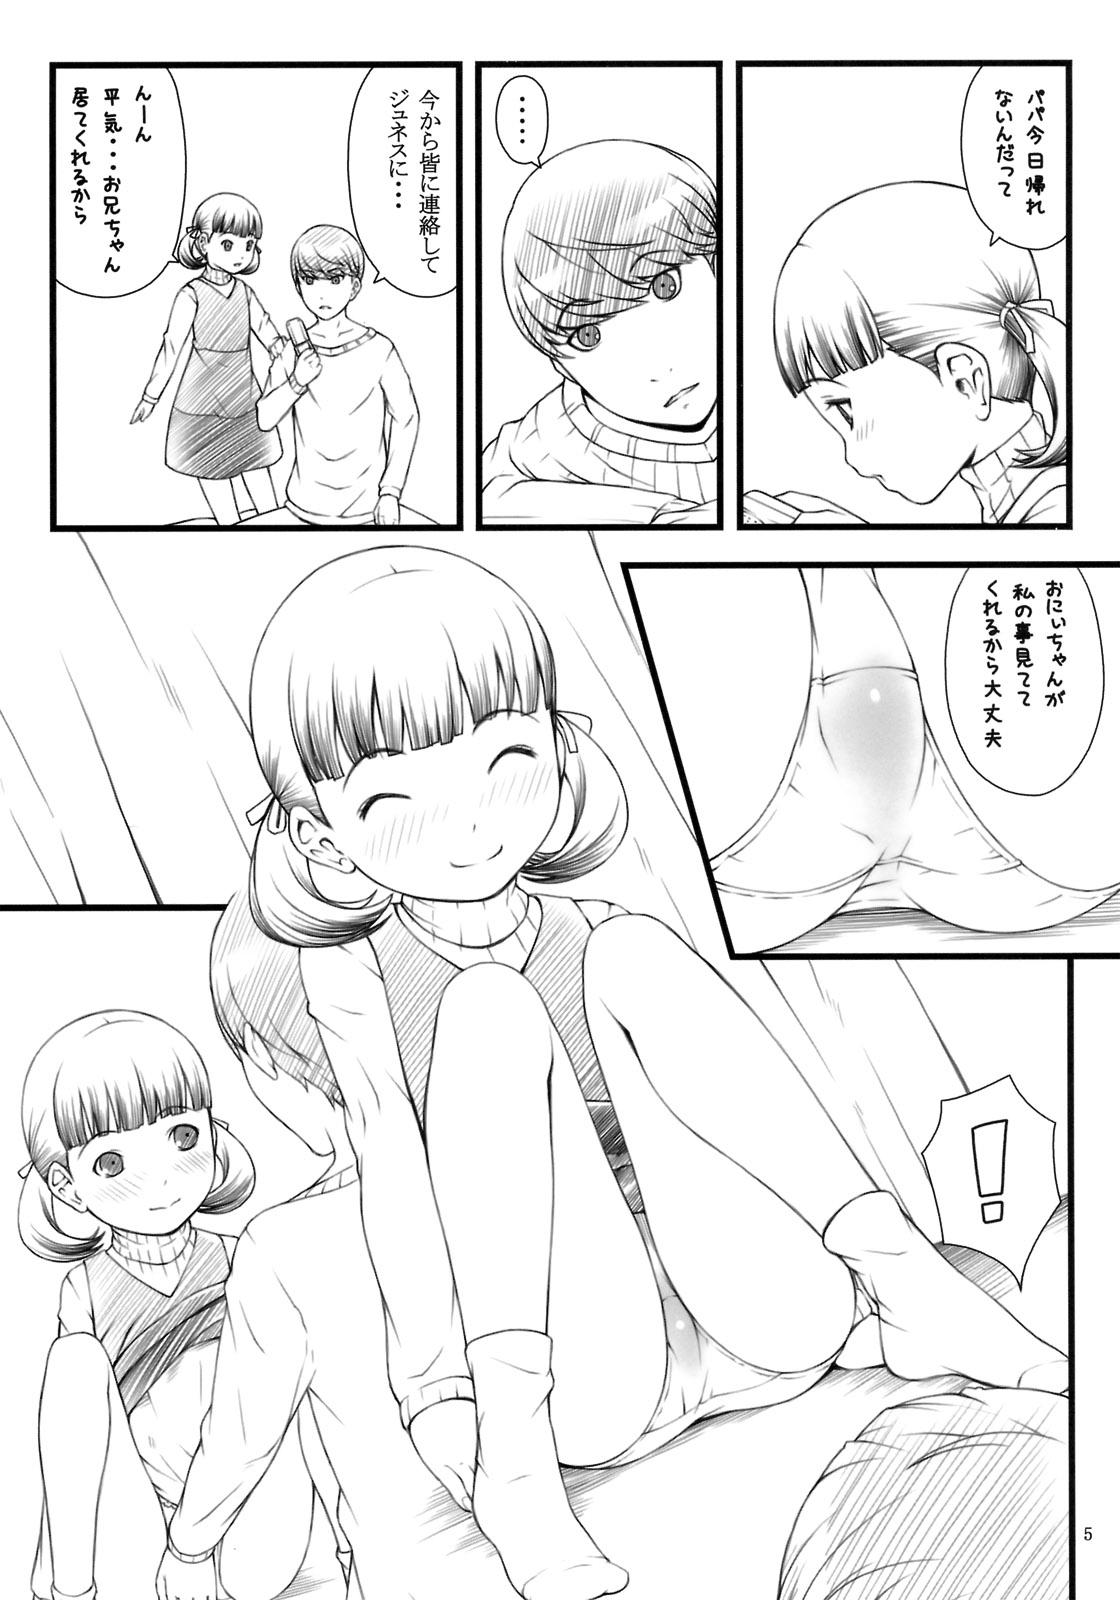 With everyday nanako life! - Persona 4 Huge Cock - Page 4